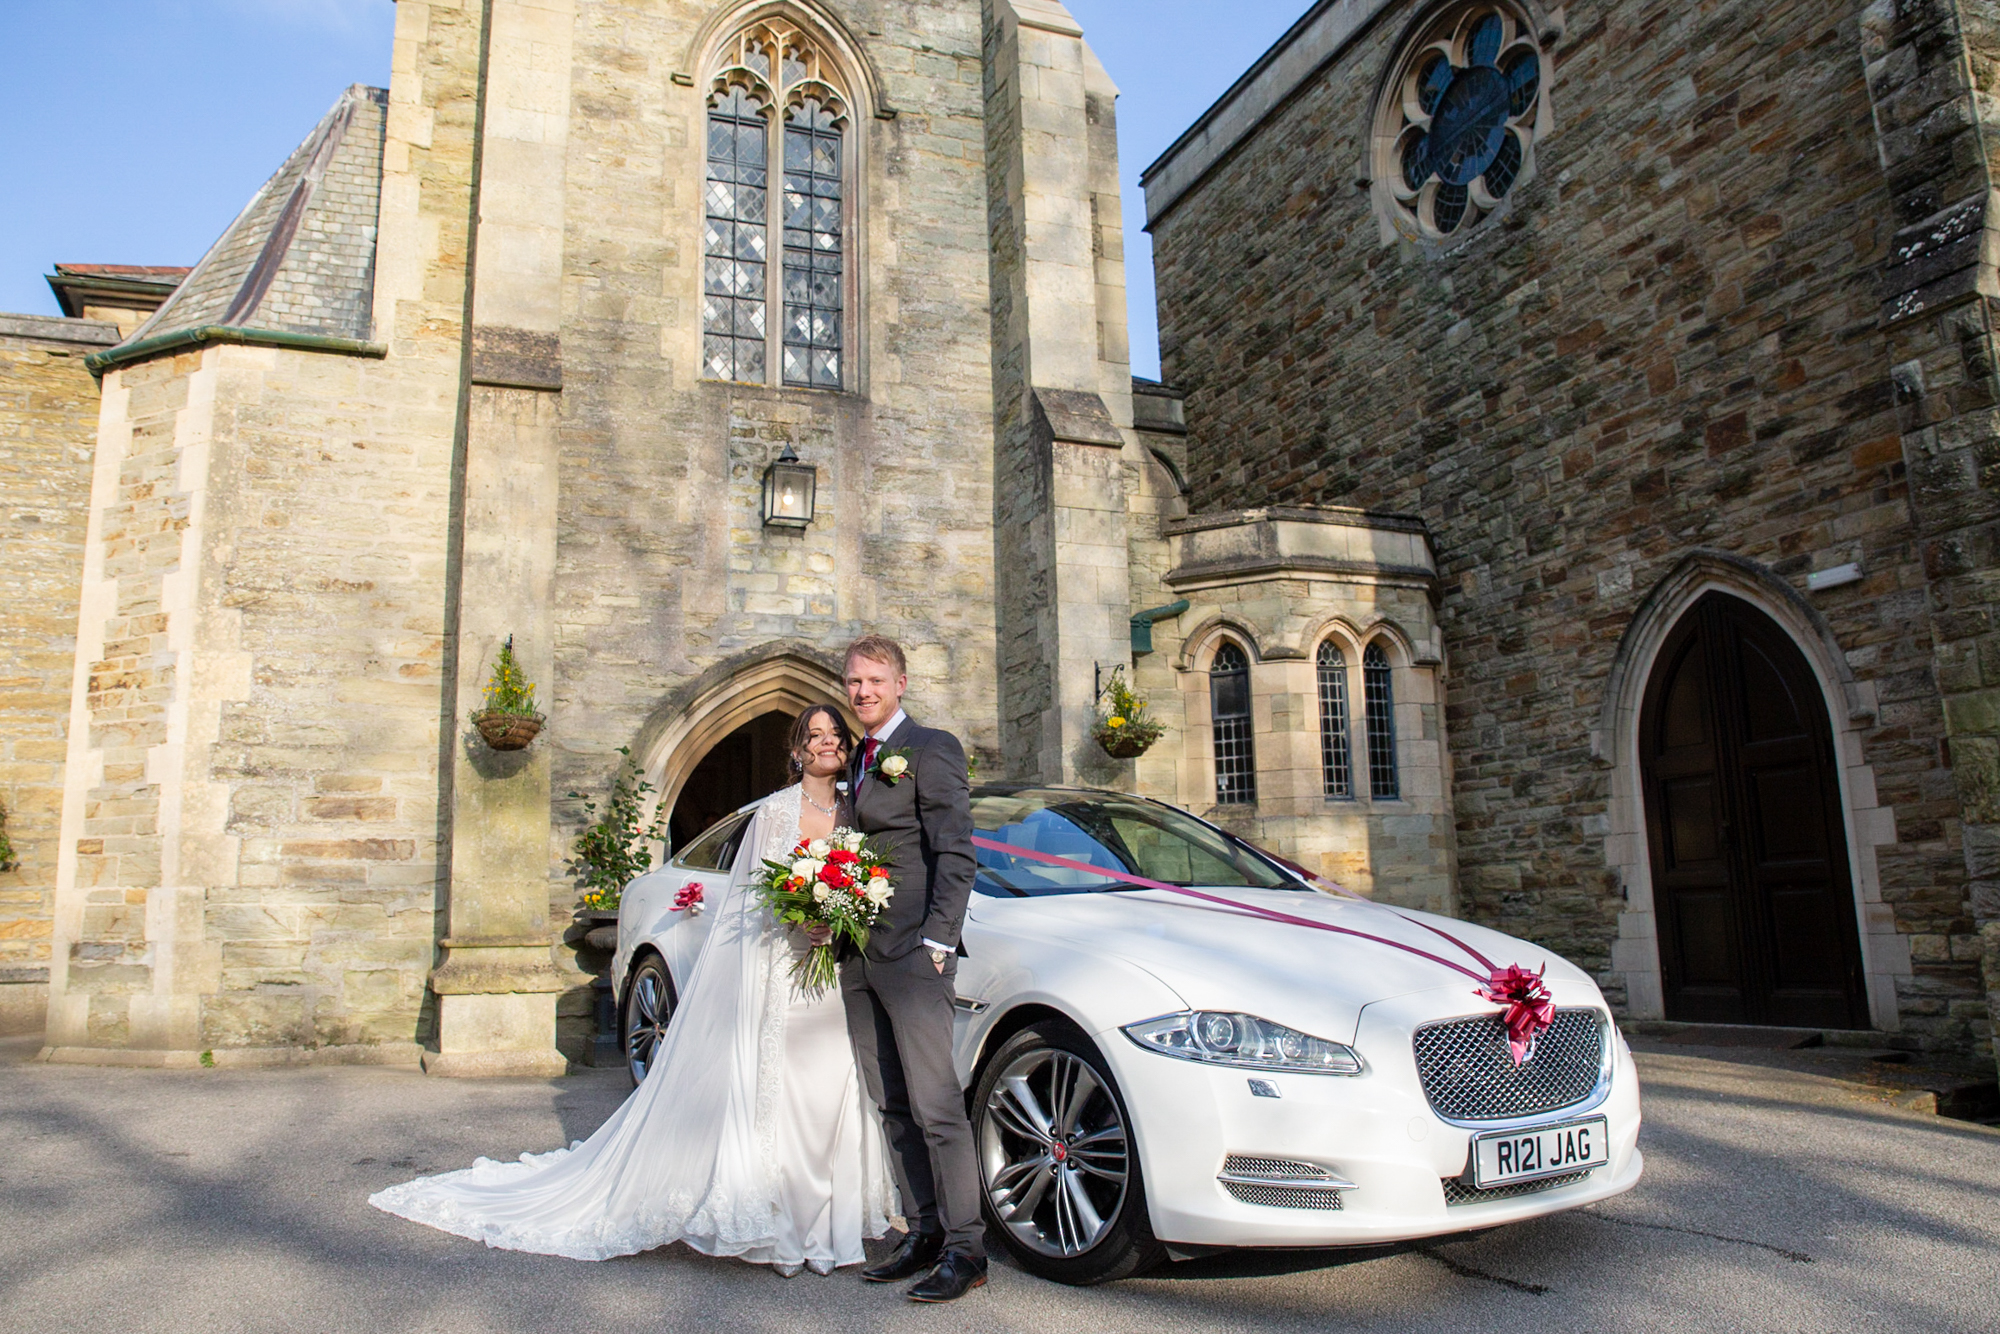 weddings at the alverton Truro by Tom Robinson photography Cornwall wedding photographer